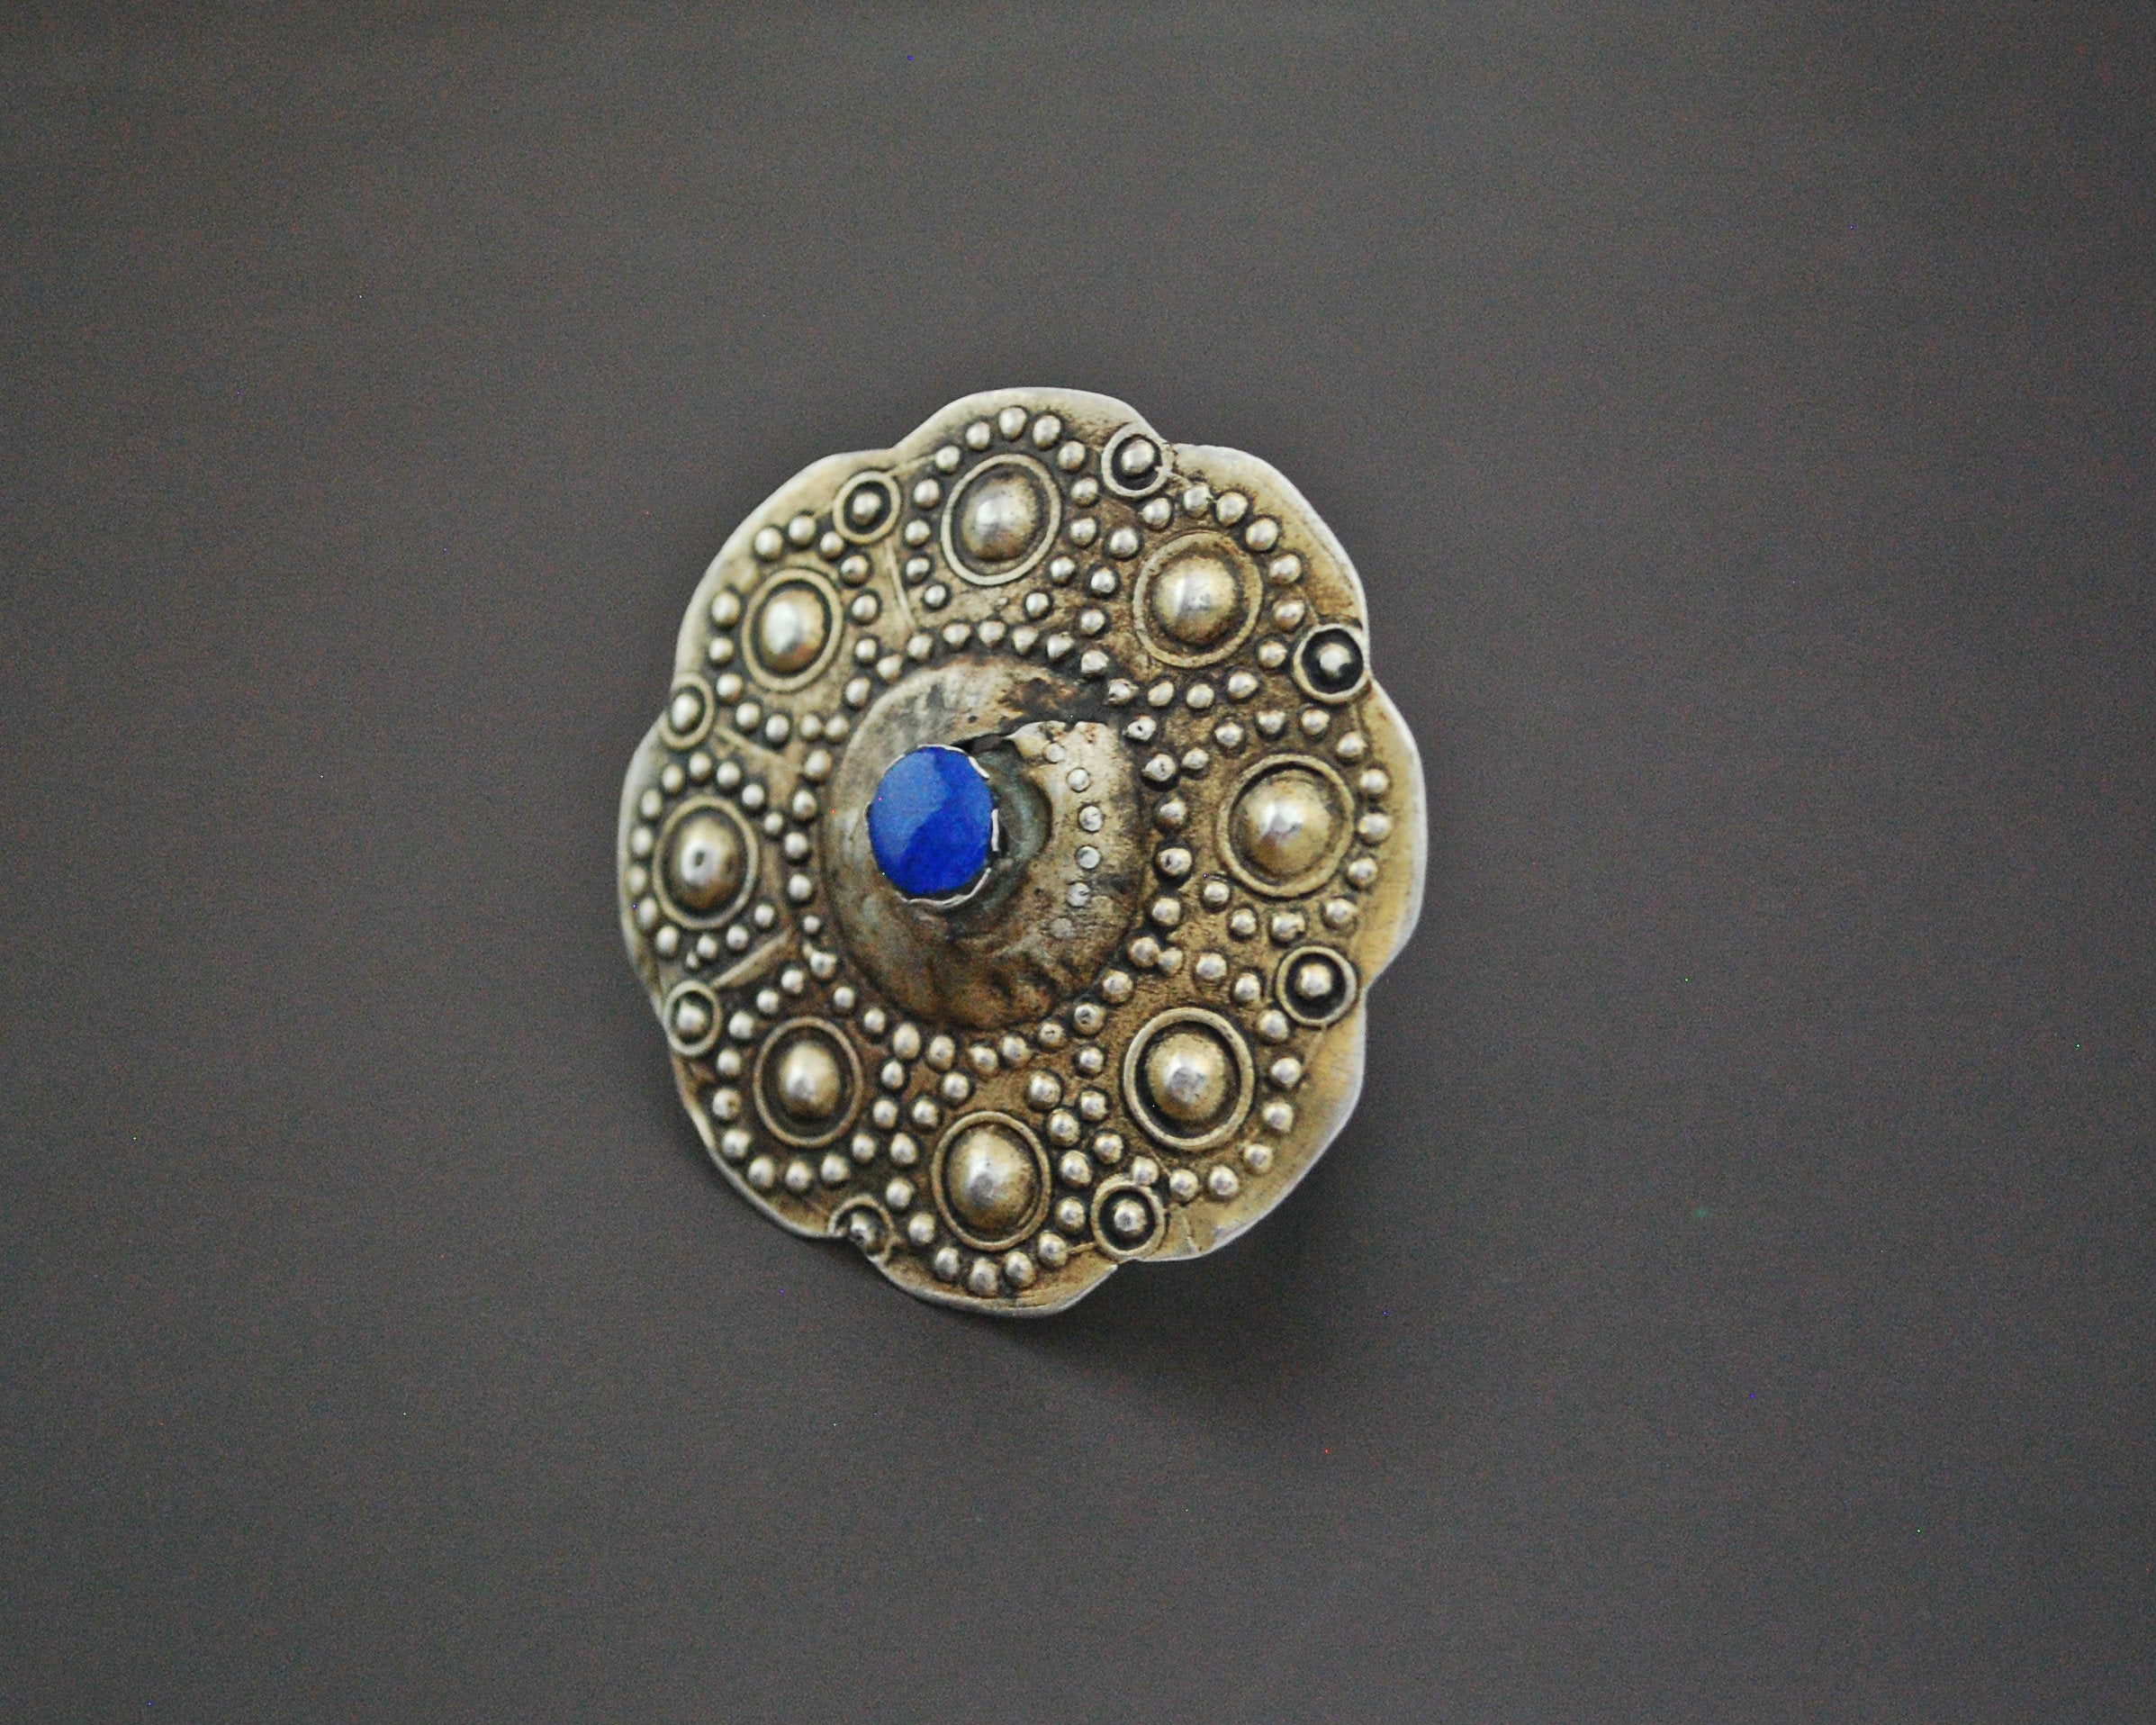 Turkmen Gilded Lapis Lazuli Ring - Size 9